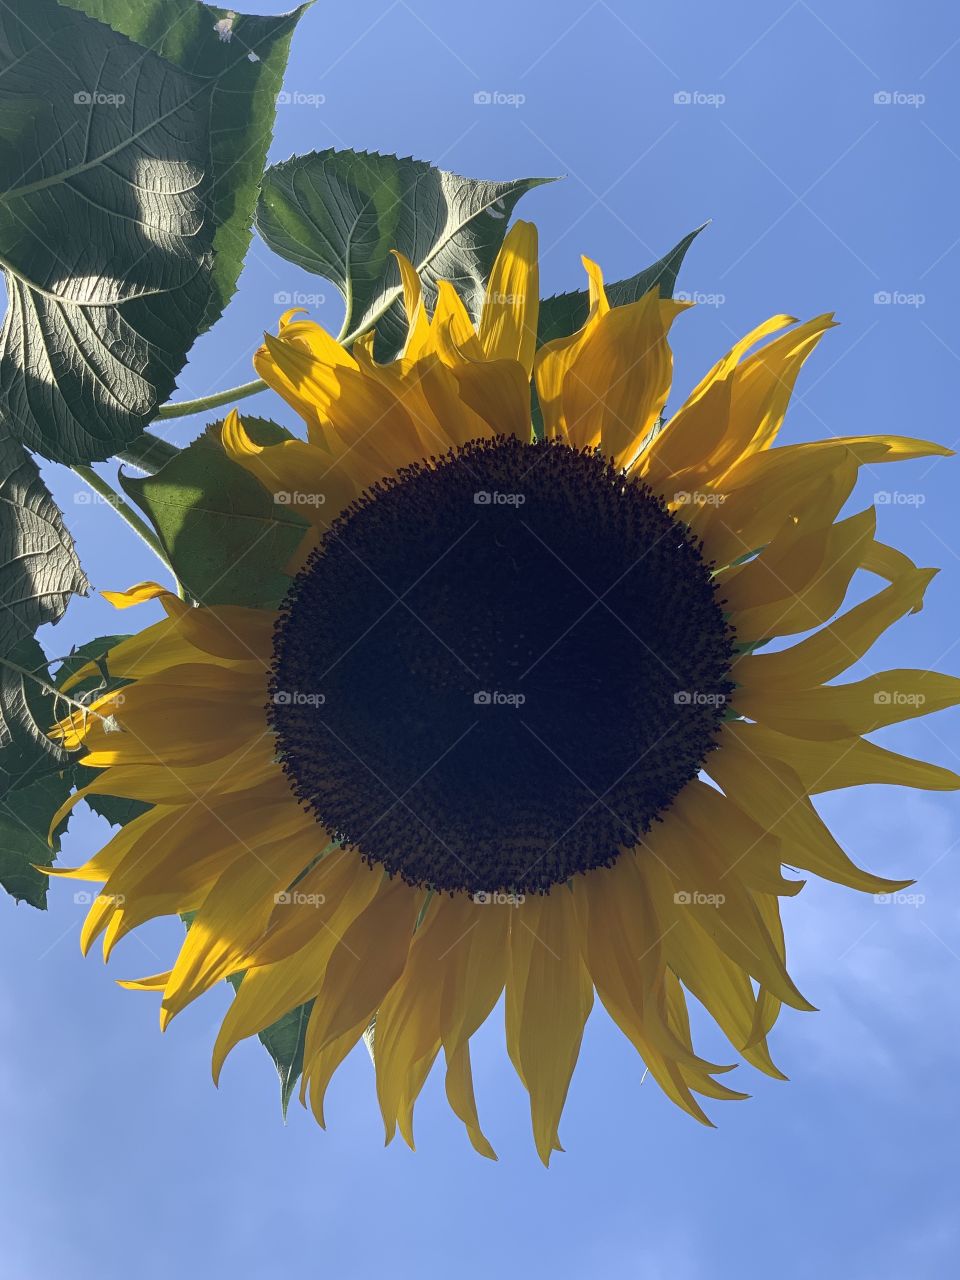 Sunflower from below